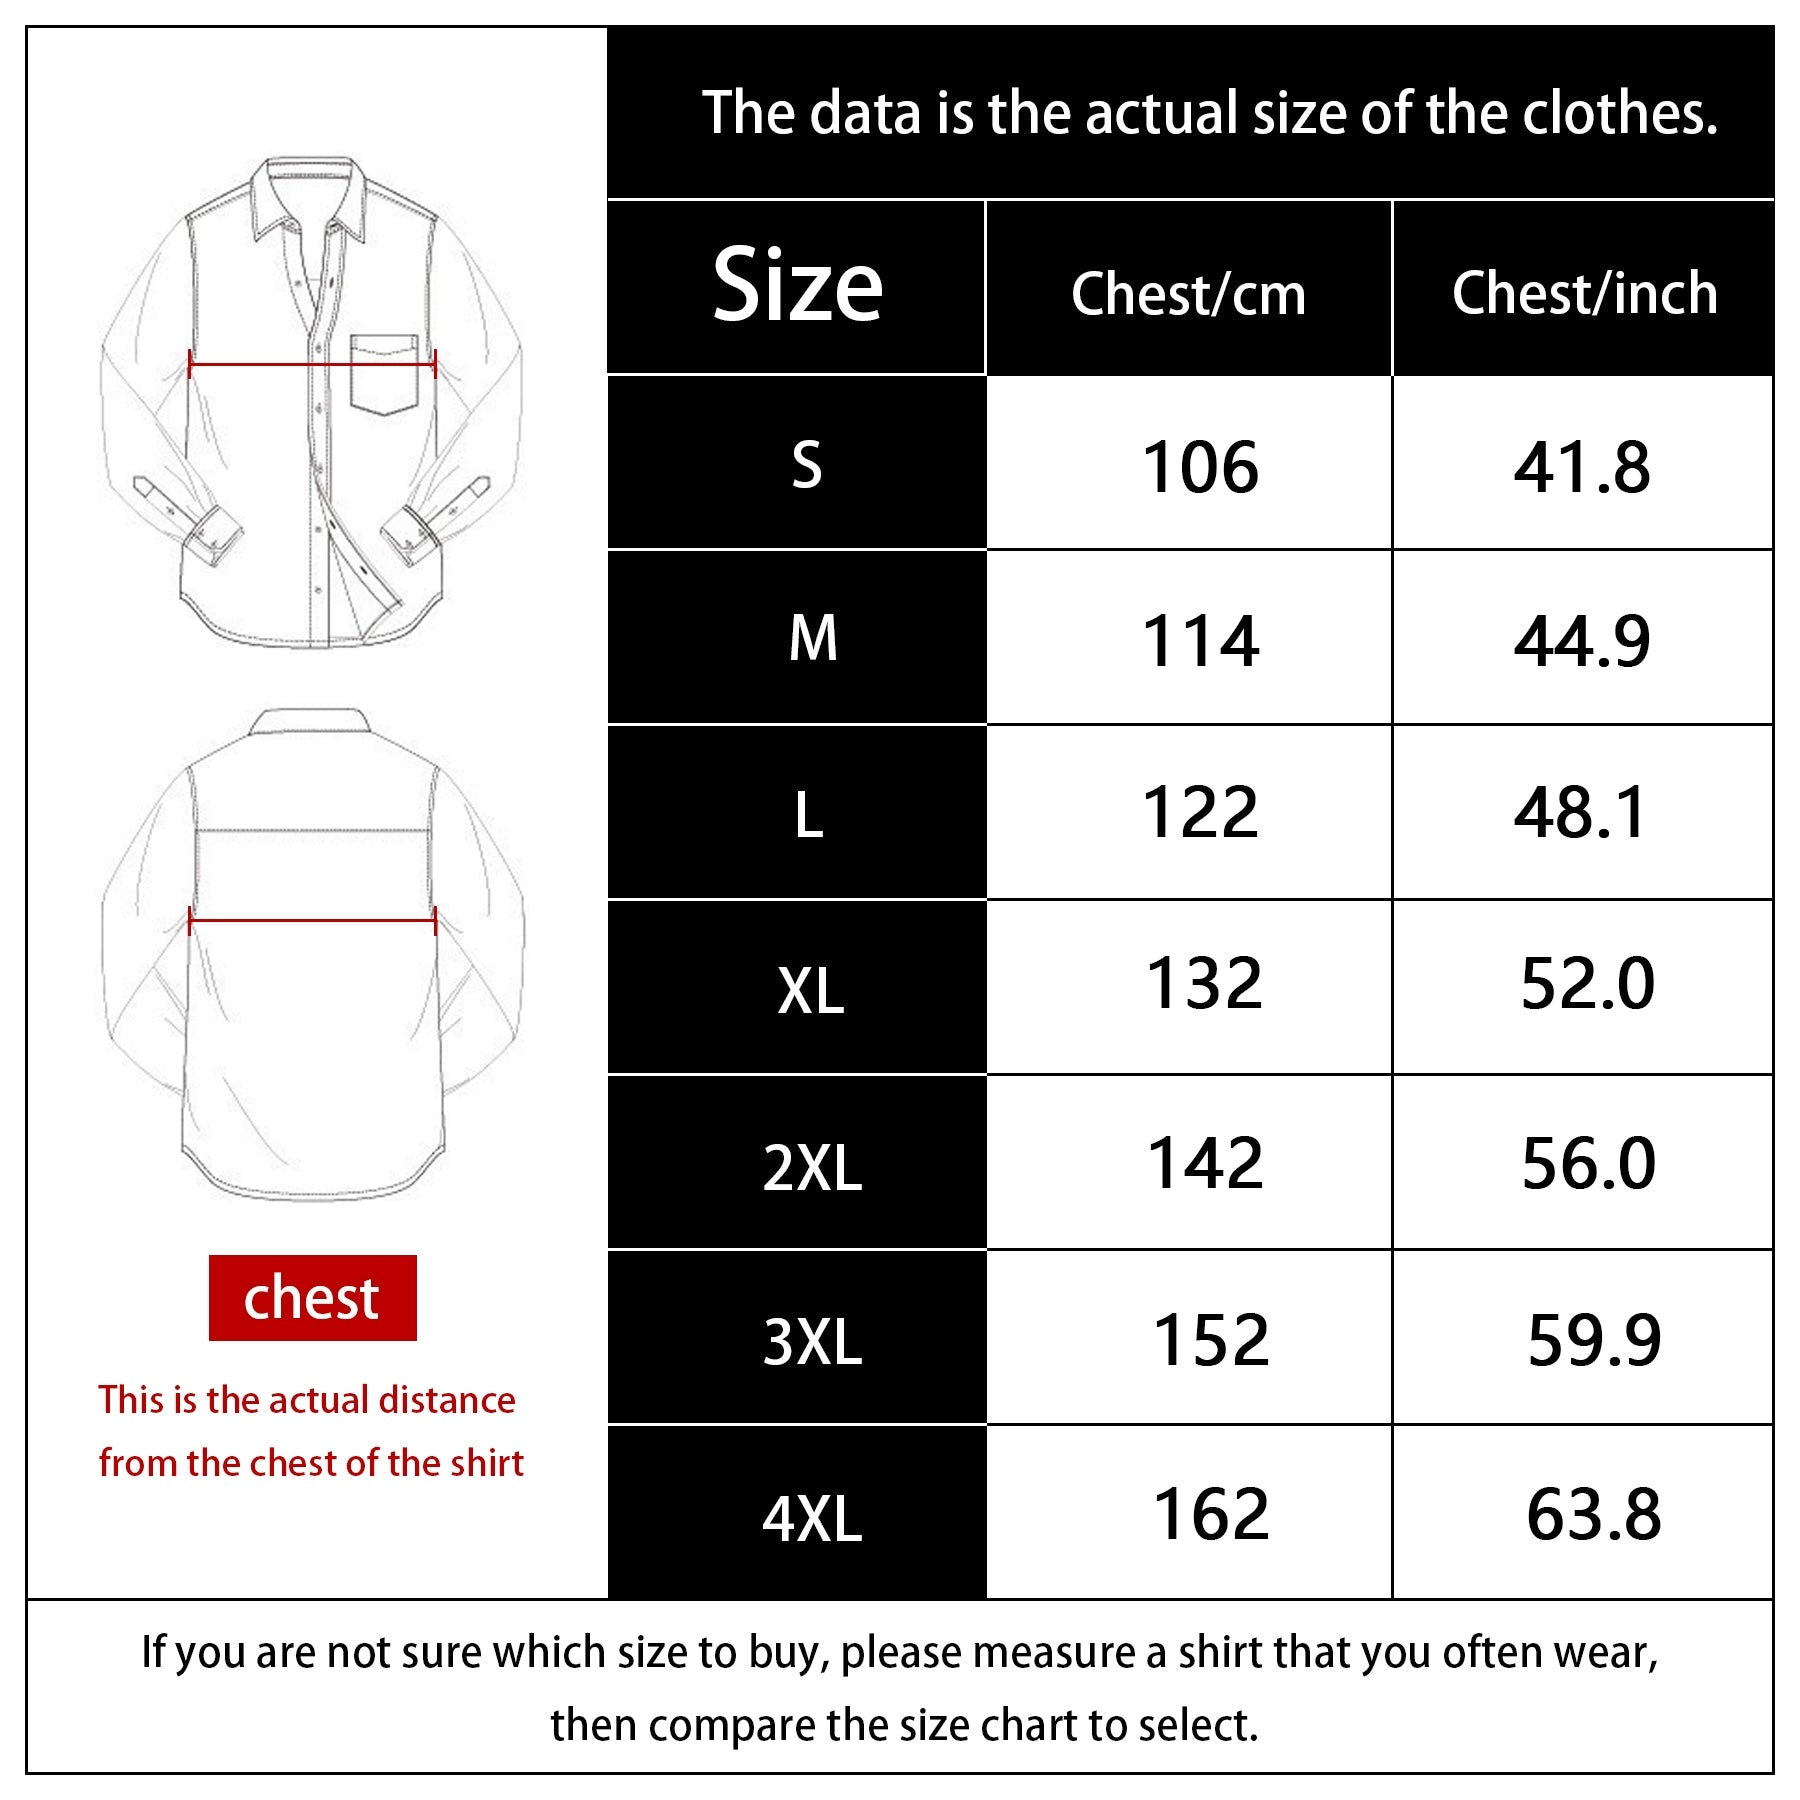 Dubinik® Mens Short Sleeve Button Down Shirts 100% Cotton Plaid Men's Casual Button-Down Shirts with Pocket#01147